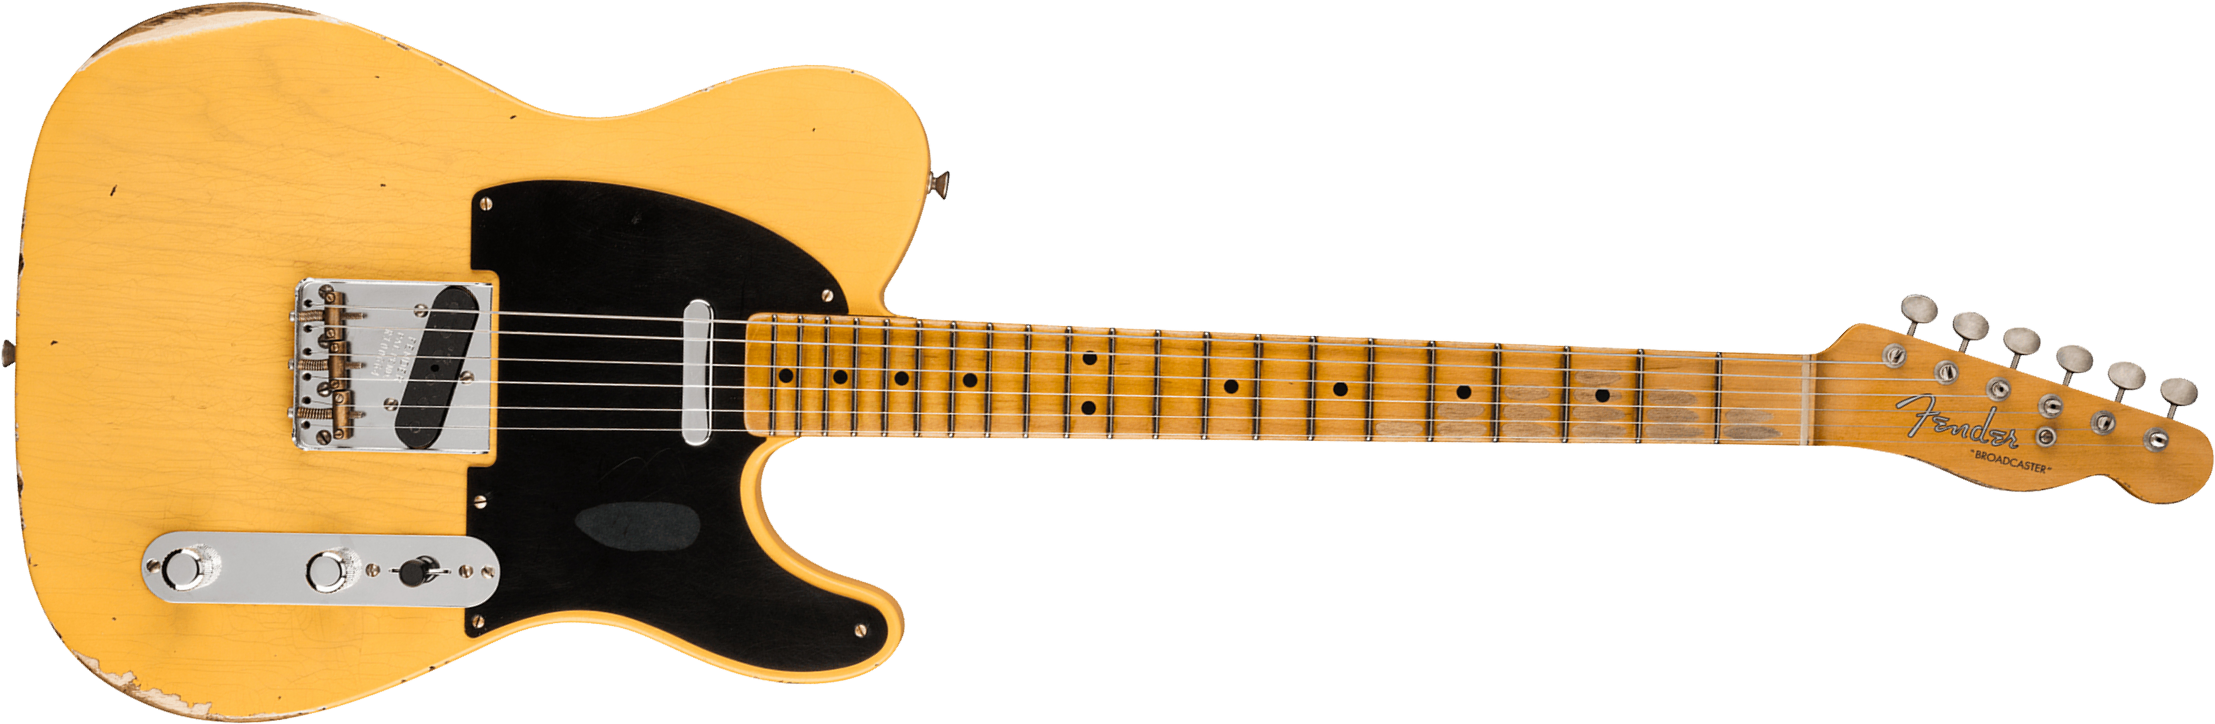 Fender Custom Shop Broadcaster Tele 70th Anniversary Ltd Mn - Relic Aged Nocaster Blonde - Guitarra eléctrica con forma de tel - Main picture